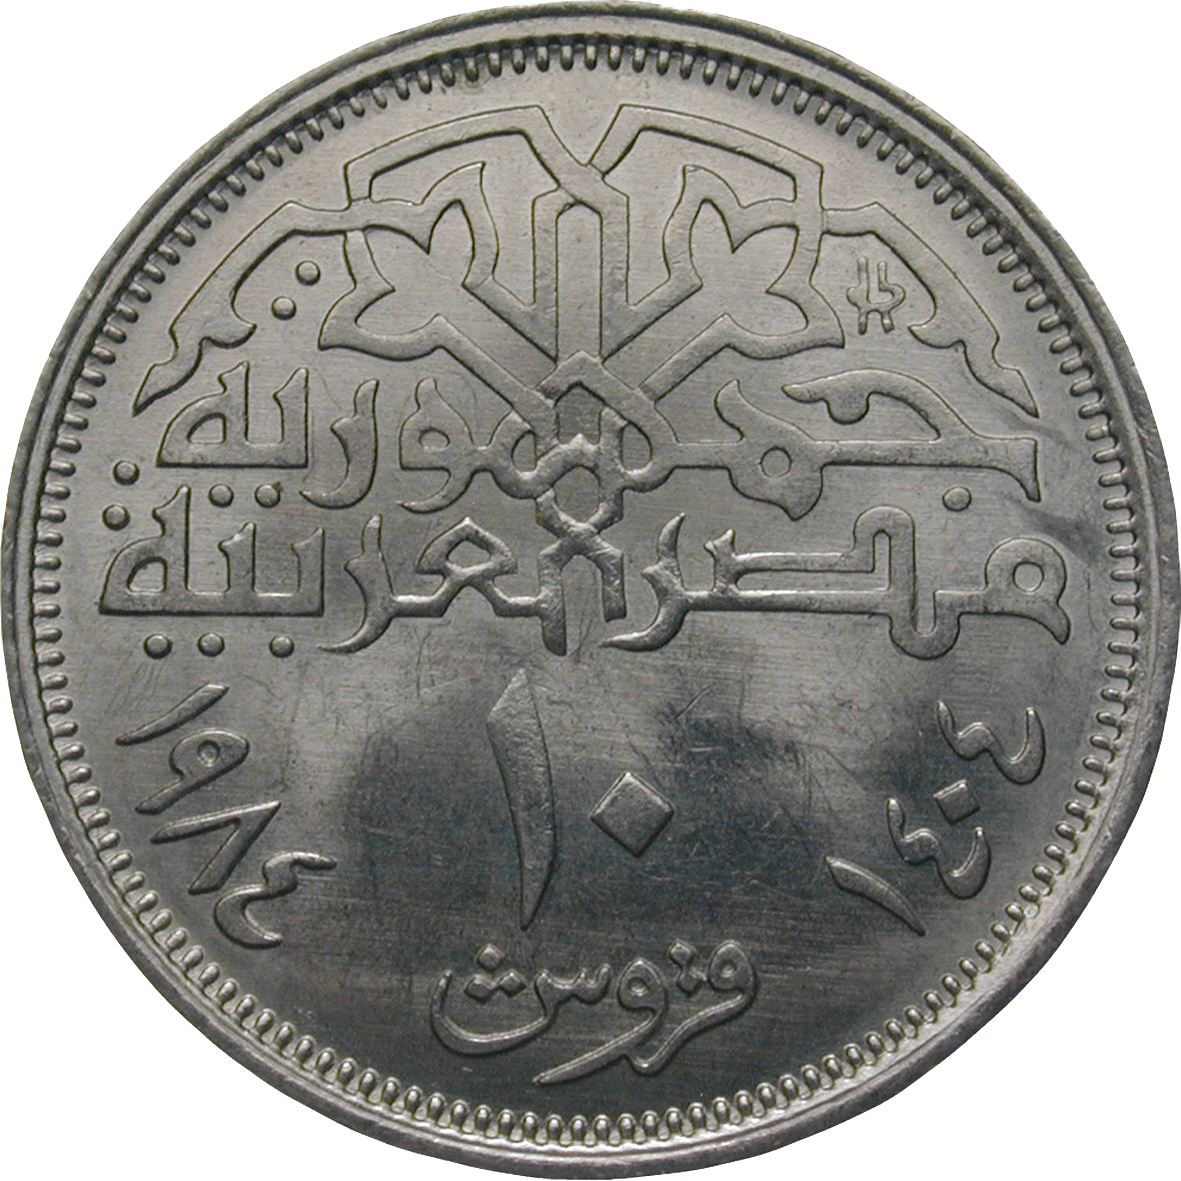 Republic of Egypt, 10 Qirsh 1404 AH (obverse)